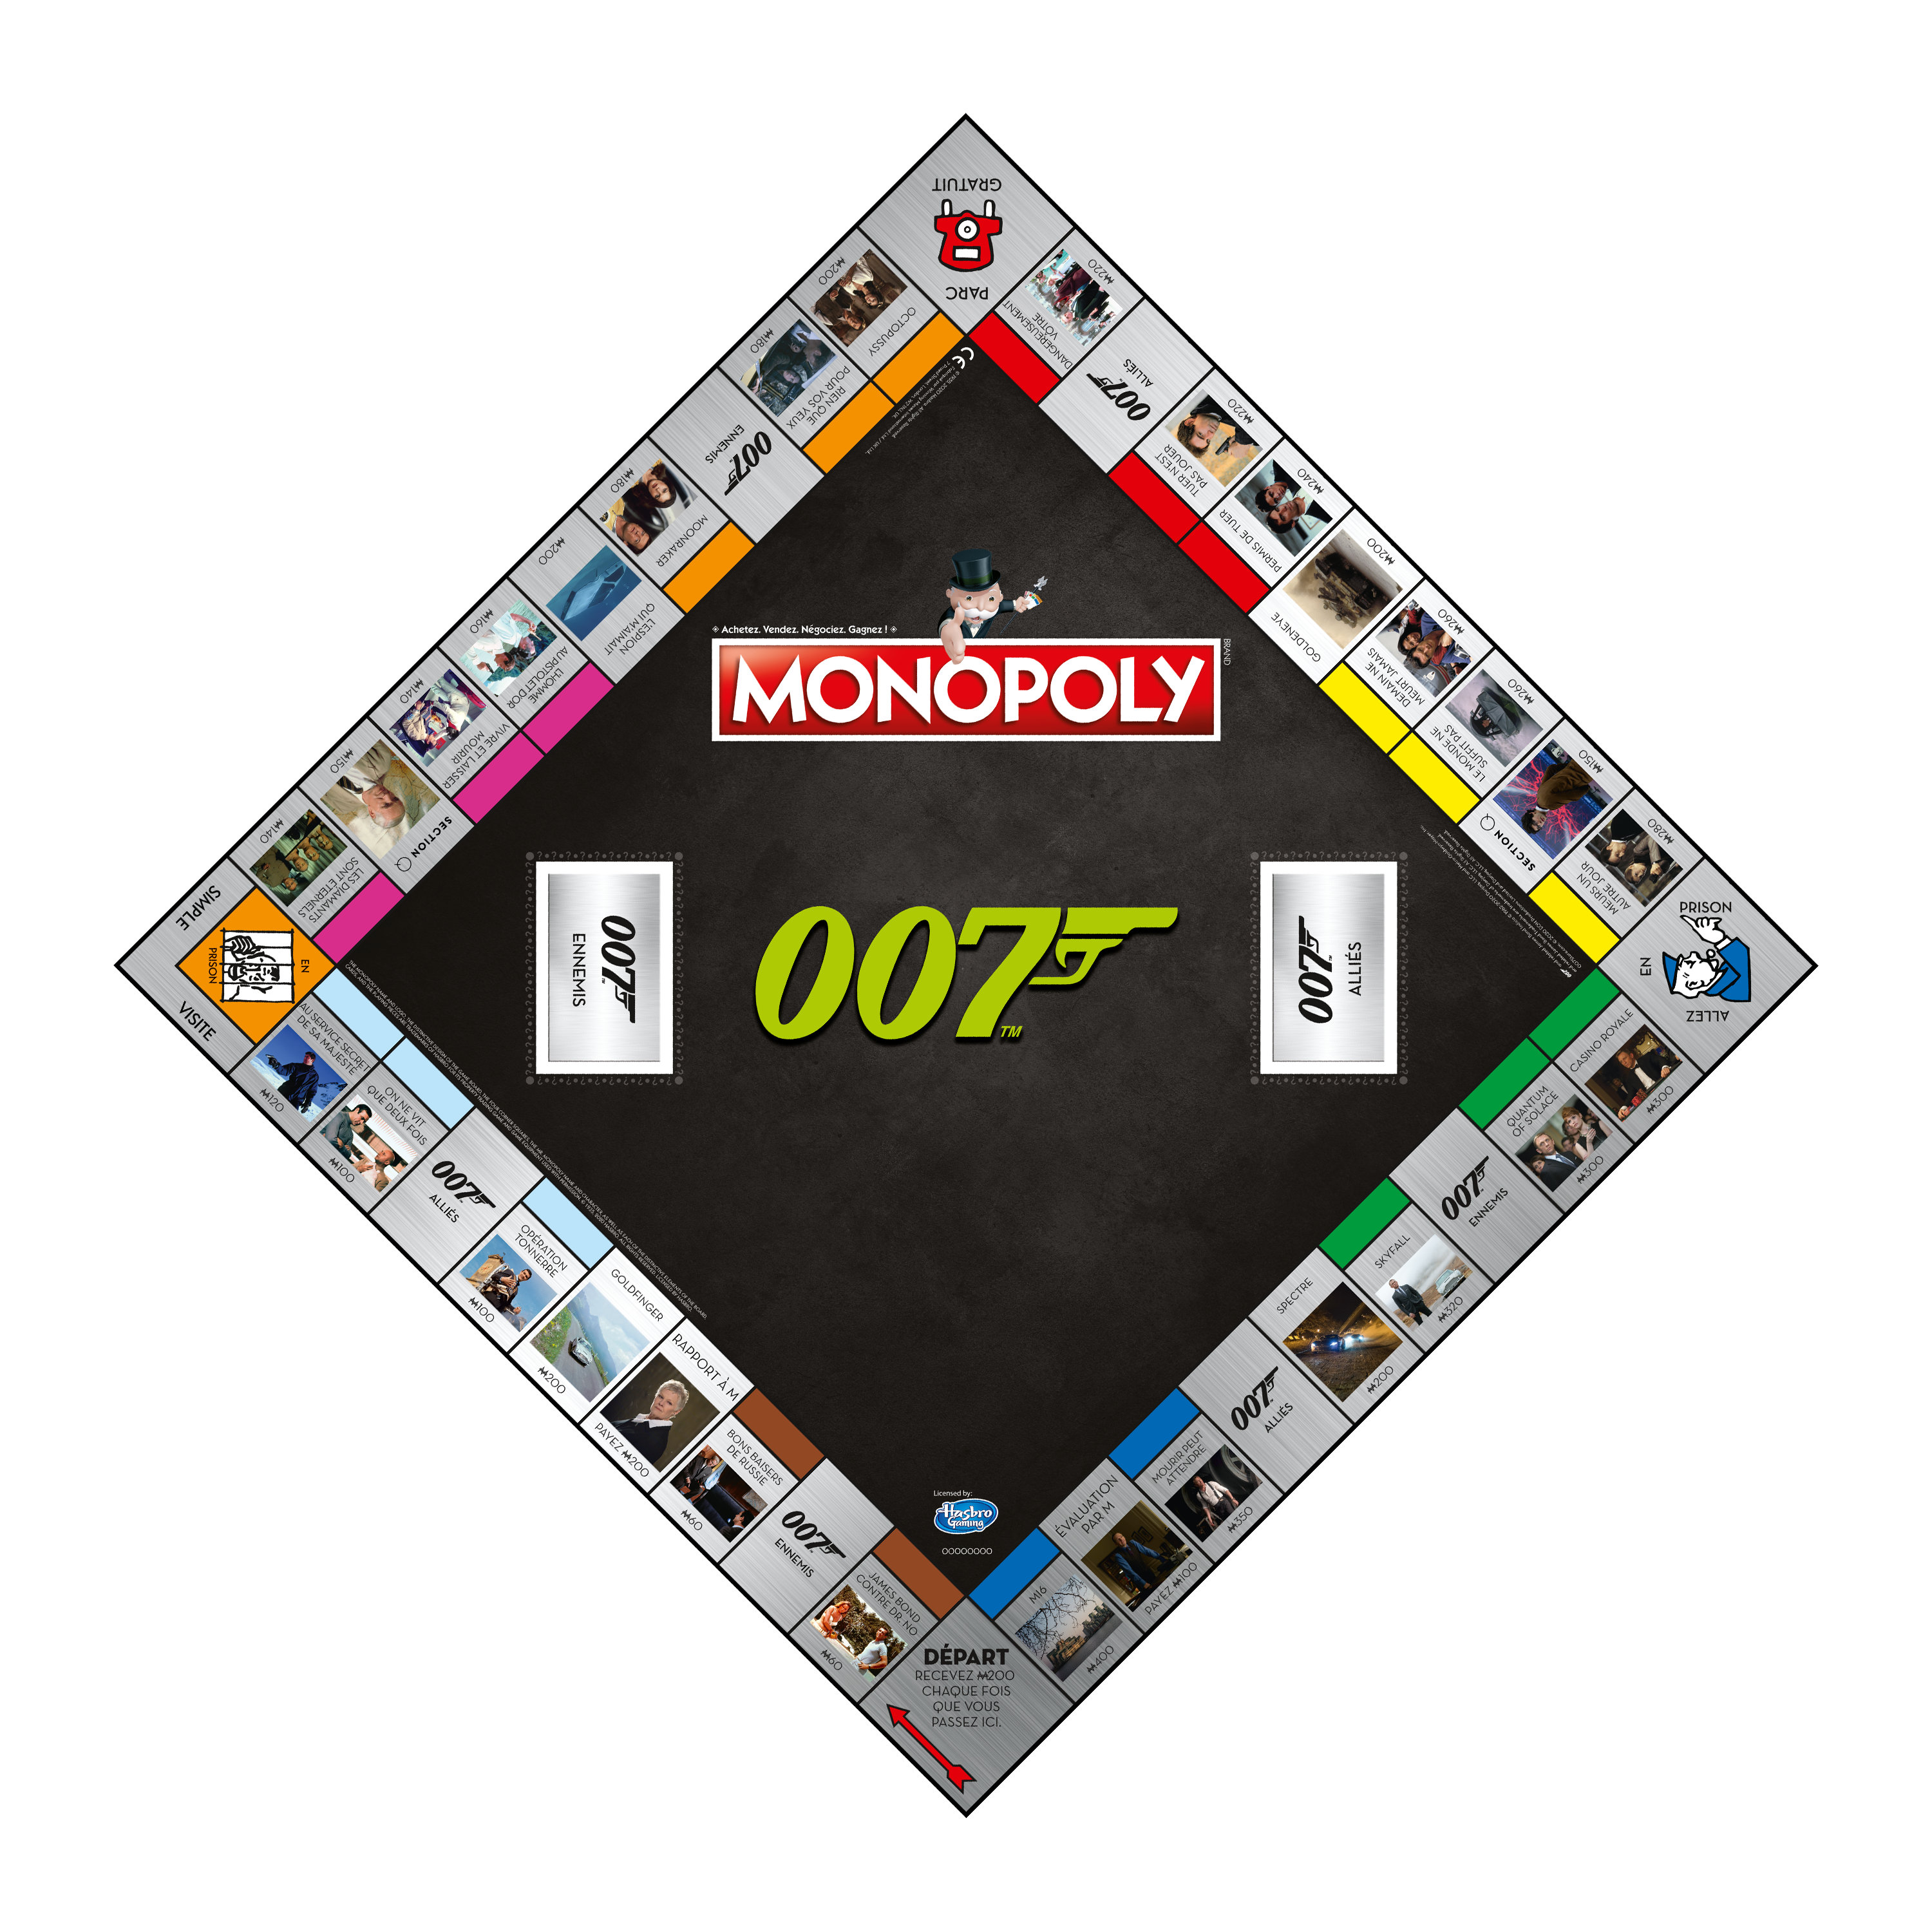 Bond James Monopoly